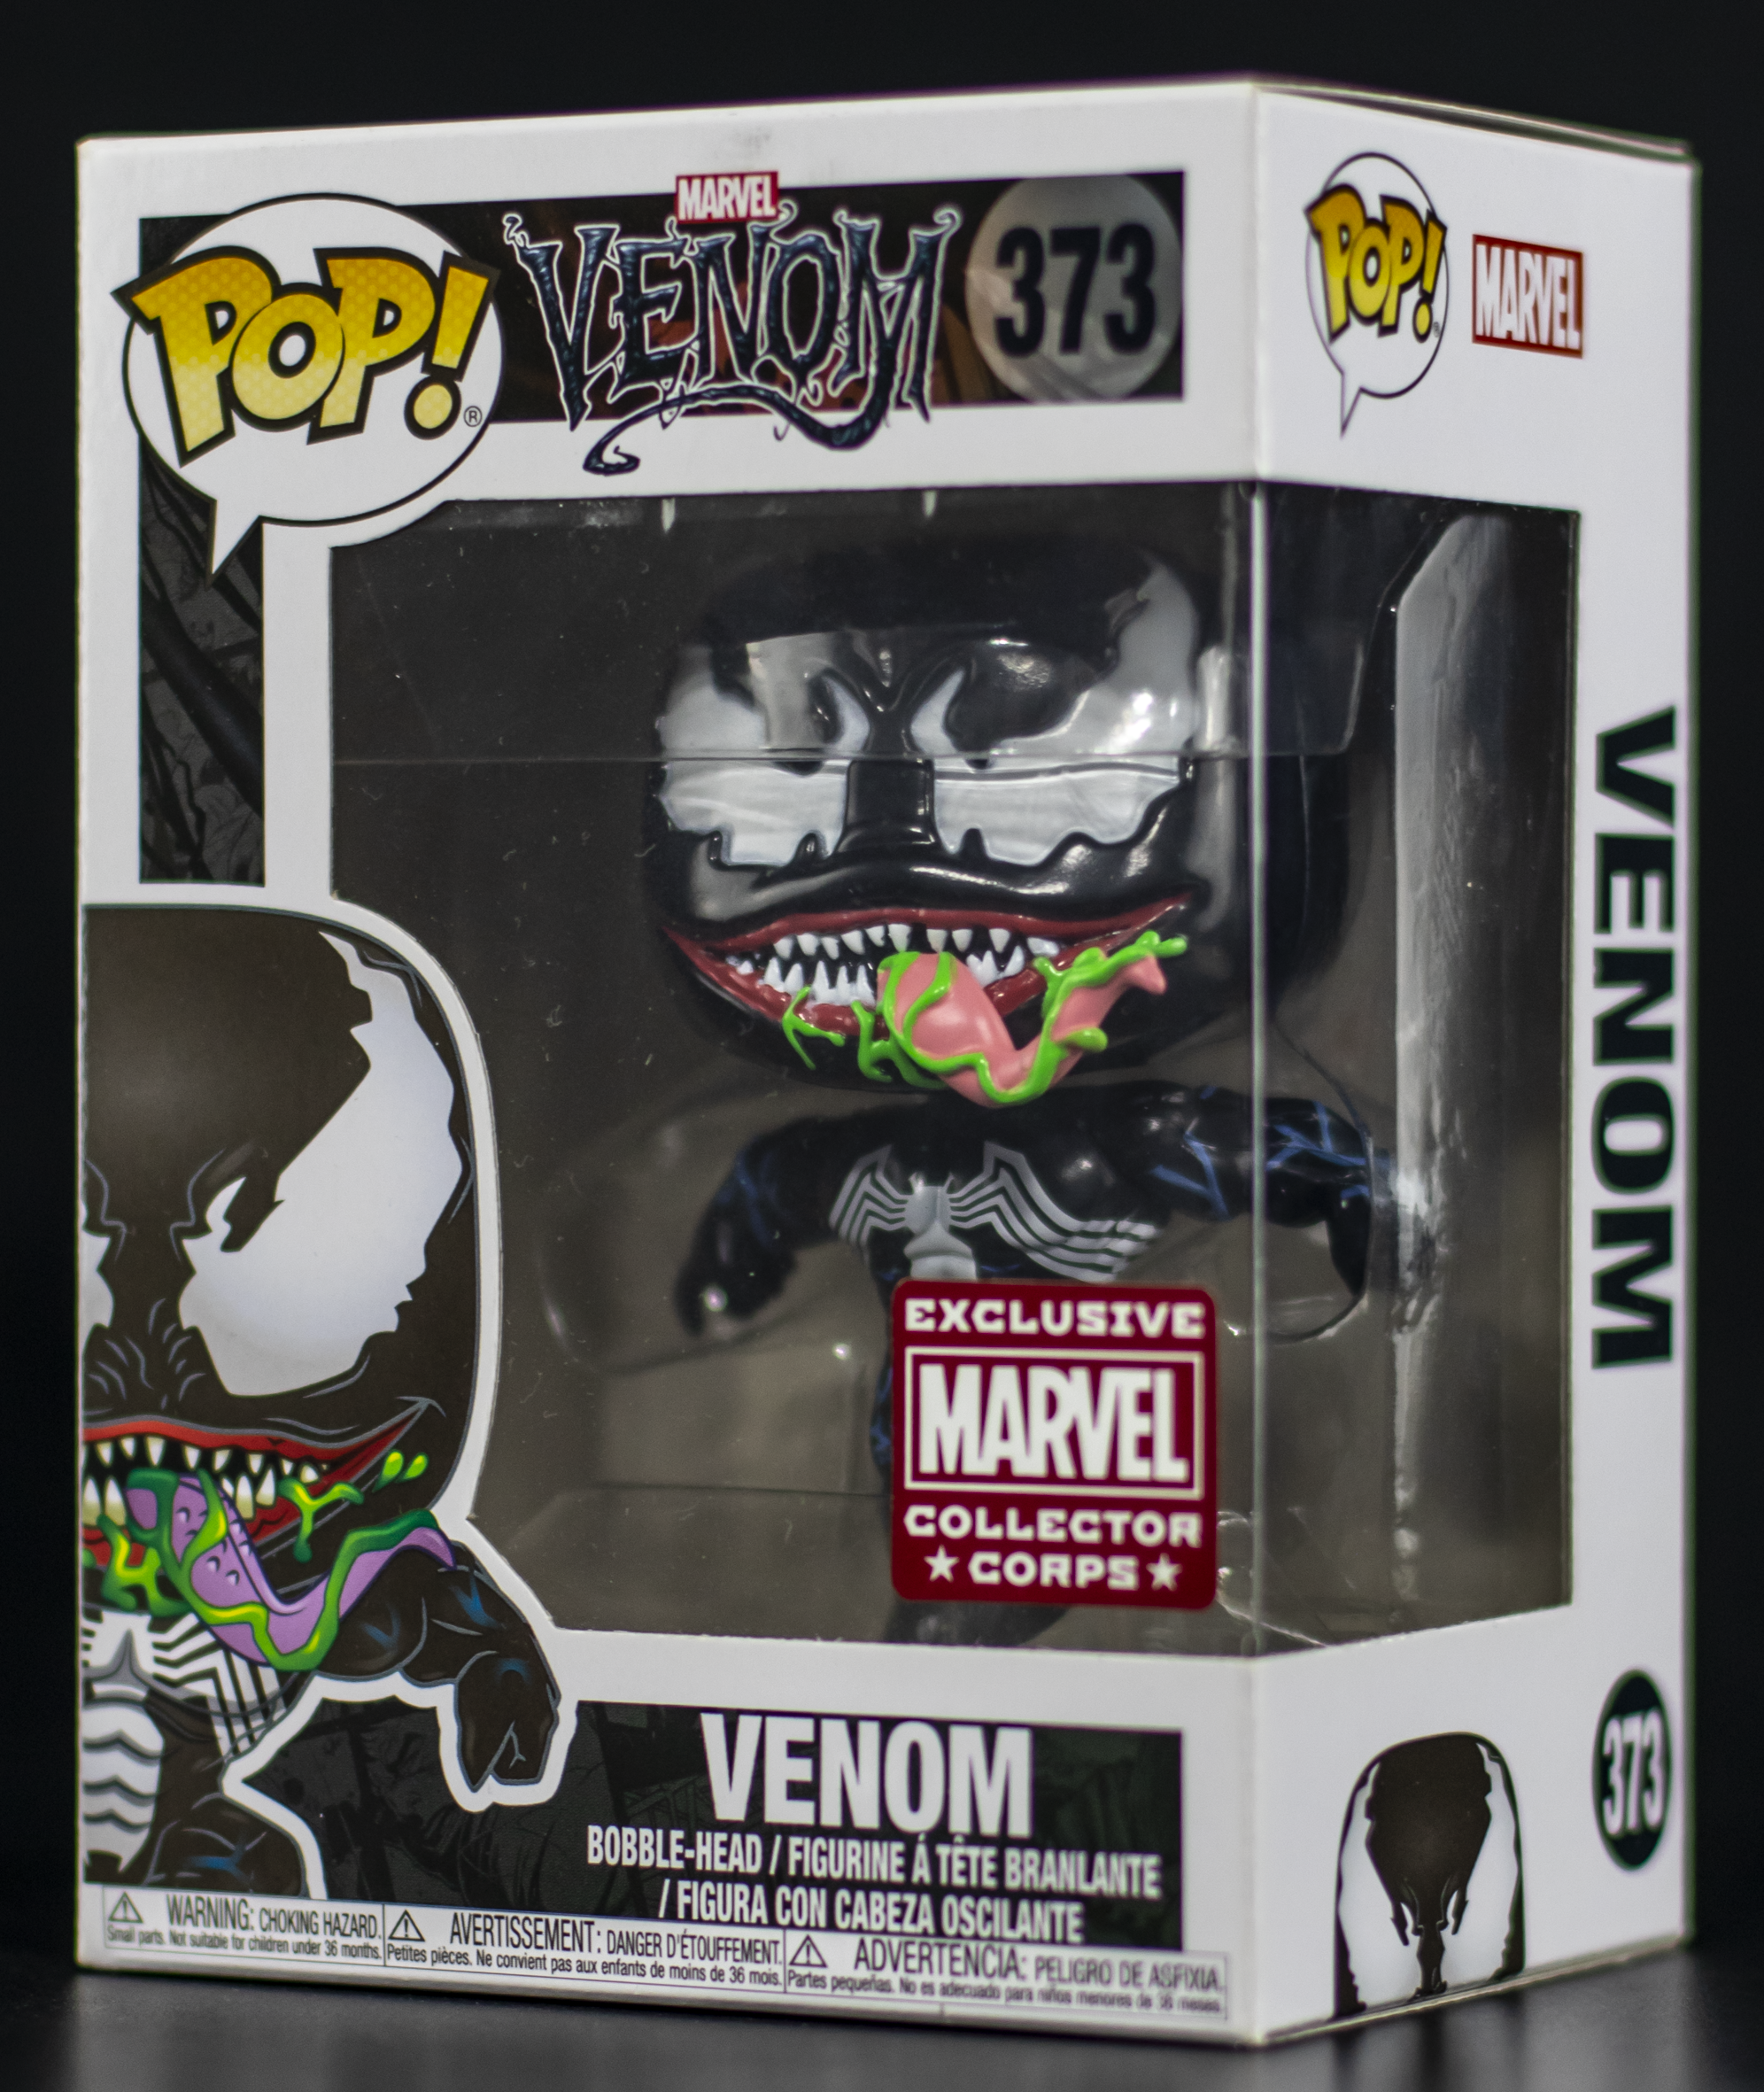 Funko Pop! "Venom" #373 Marvel Venom Exclusive Marvel